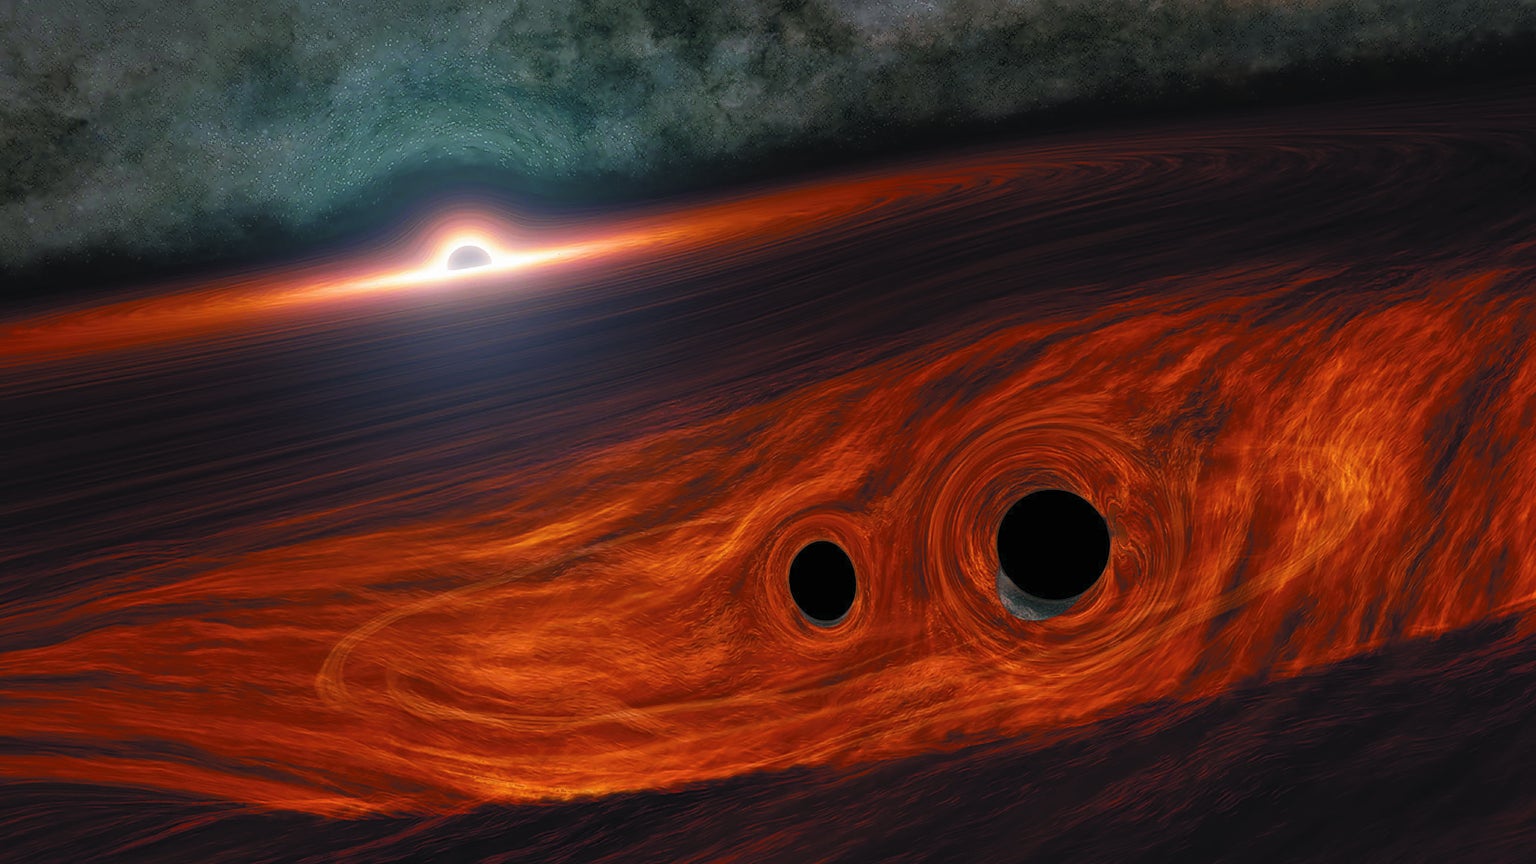 Merging black holes illustrated